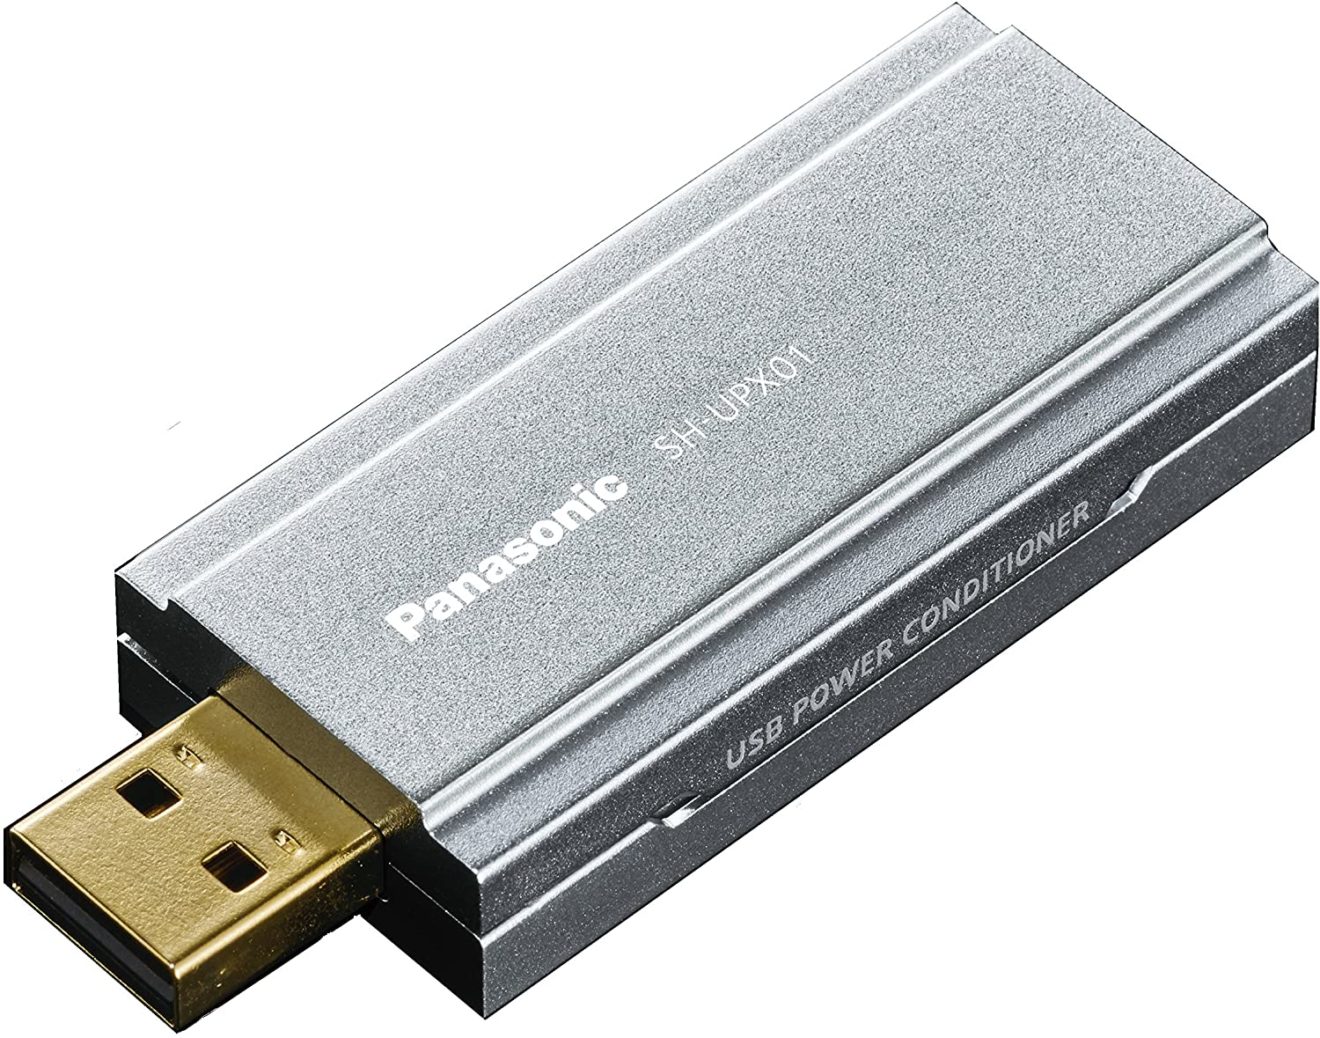 Panasonic StoreがPanasonic Store Plusになってポイント消化に困る～Panasonic USBパワーコンディショナー SH-UPX01 or SEQ0118～